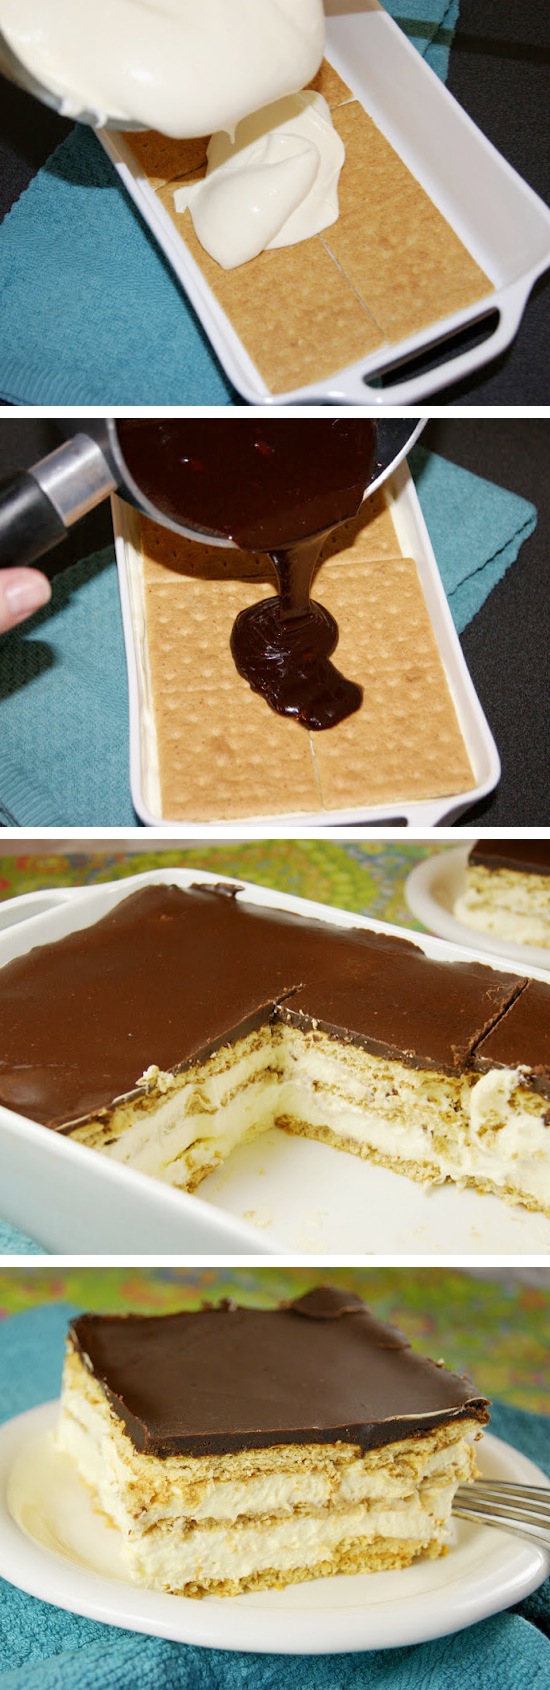 No-Bake-Chocolate-Eclair-Dessert